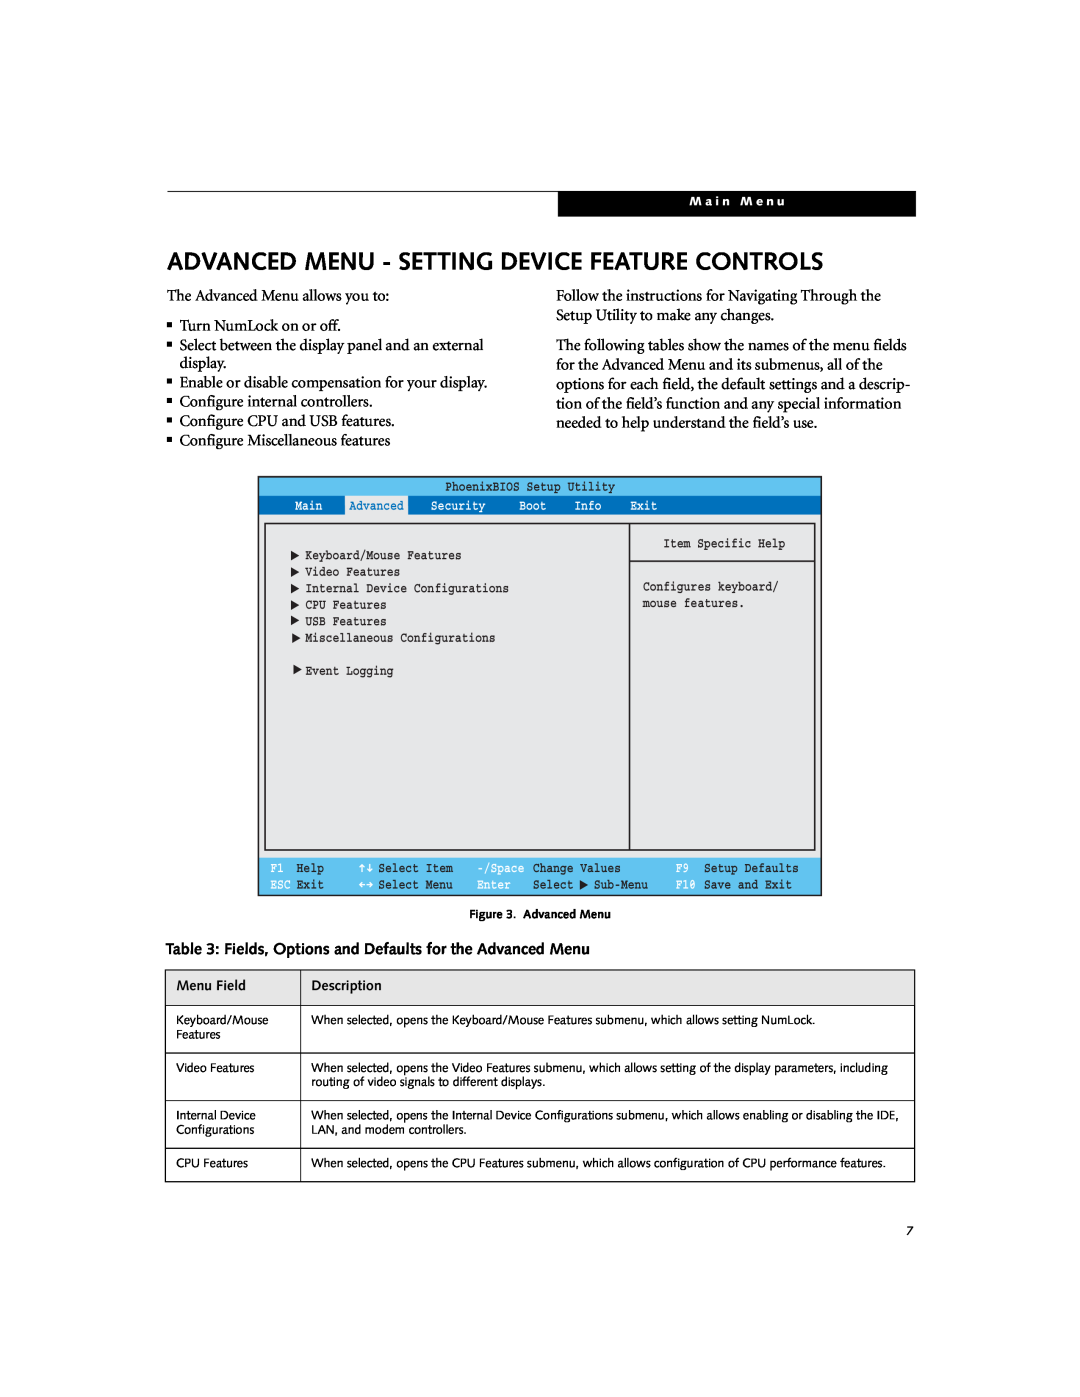 Fujitsu Siemens Computers B6230 manual Advanced Menu - Setting Device Feature Controls 